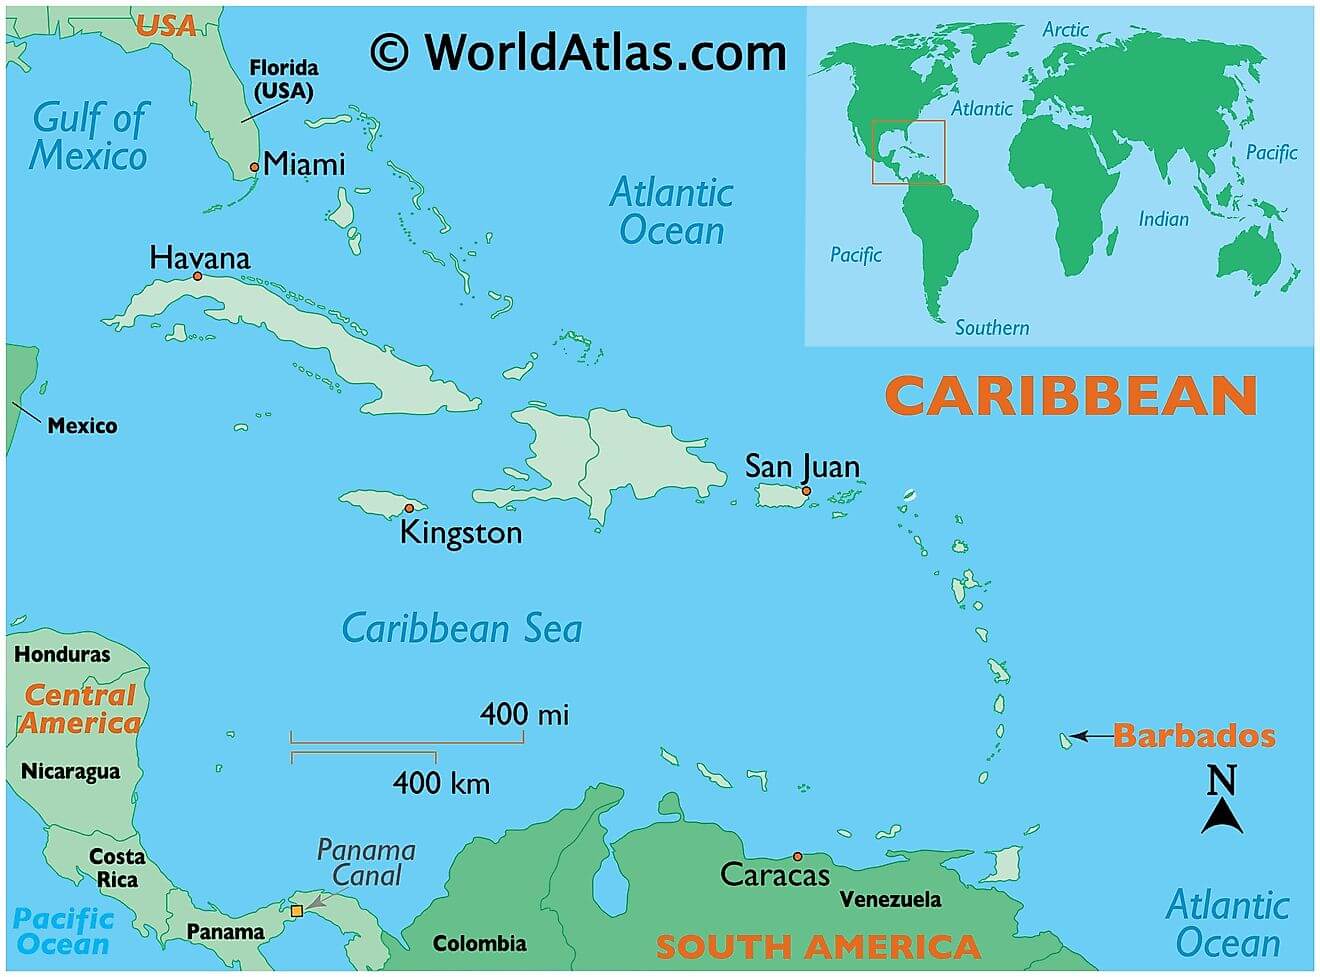 Barbados ở đâu?